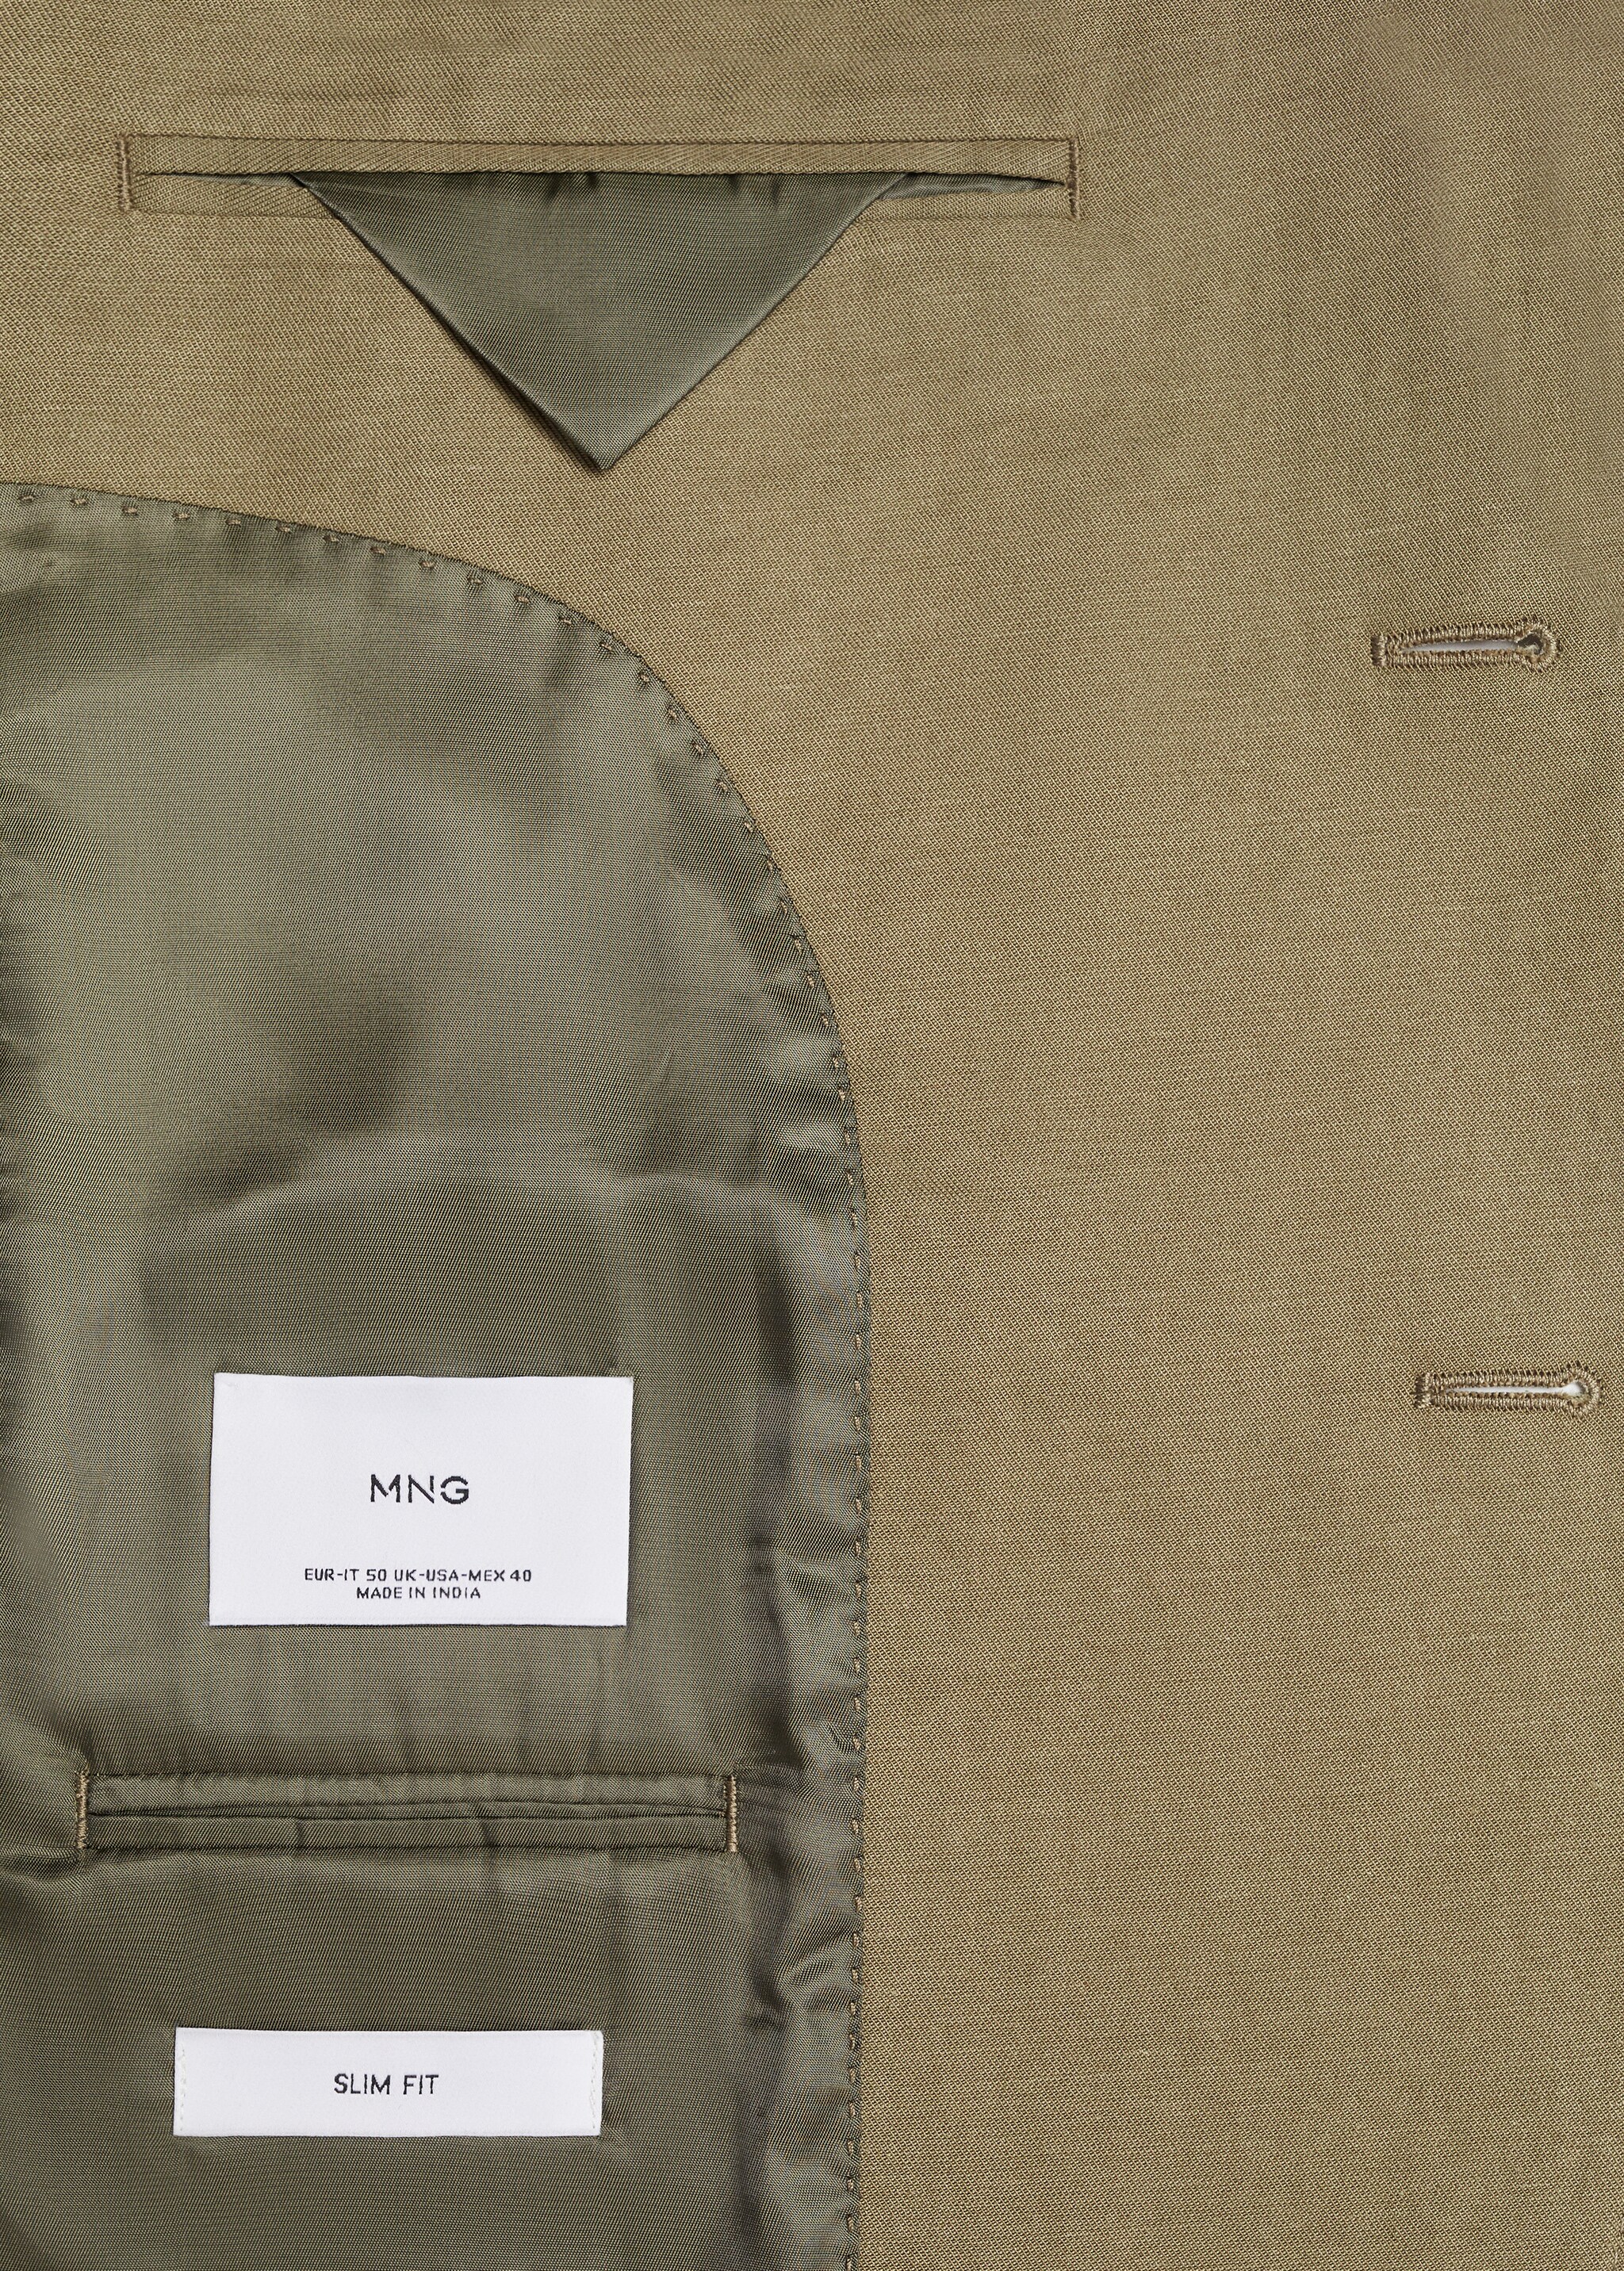 Slim fit linen and cotton suit jacket - Details of the article 8